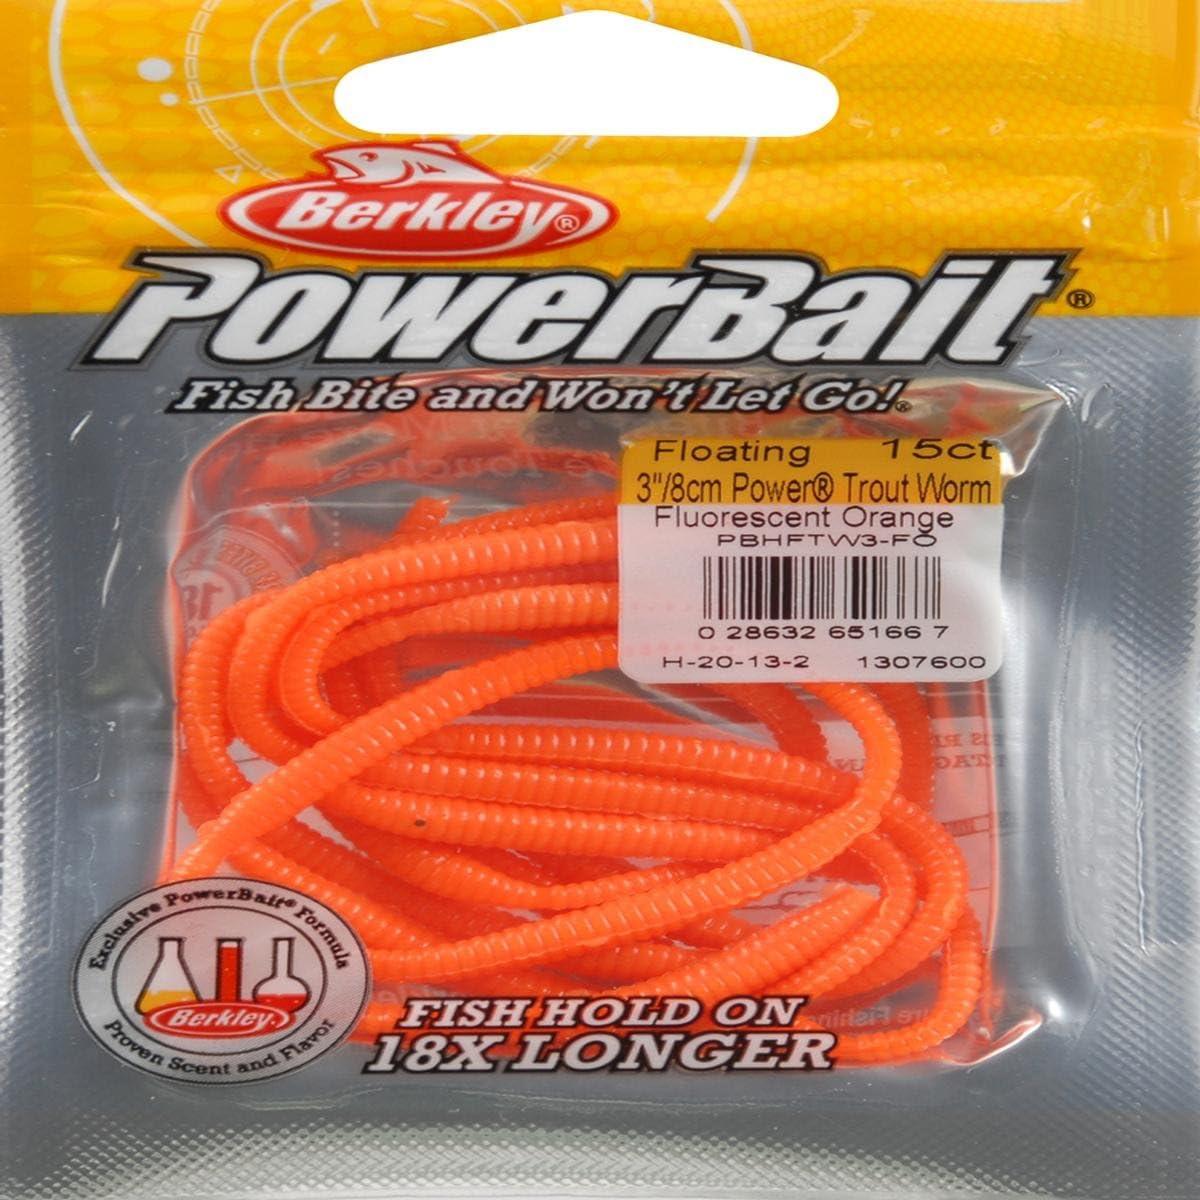 Berkley PowerBait Power Floating Trout Worm Fishing Soft Bait, Fluorescent  Orange - Original Scent, 3in